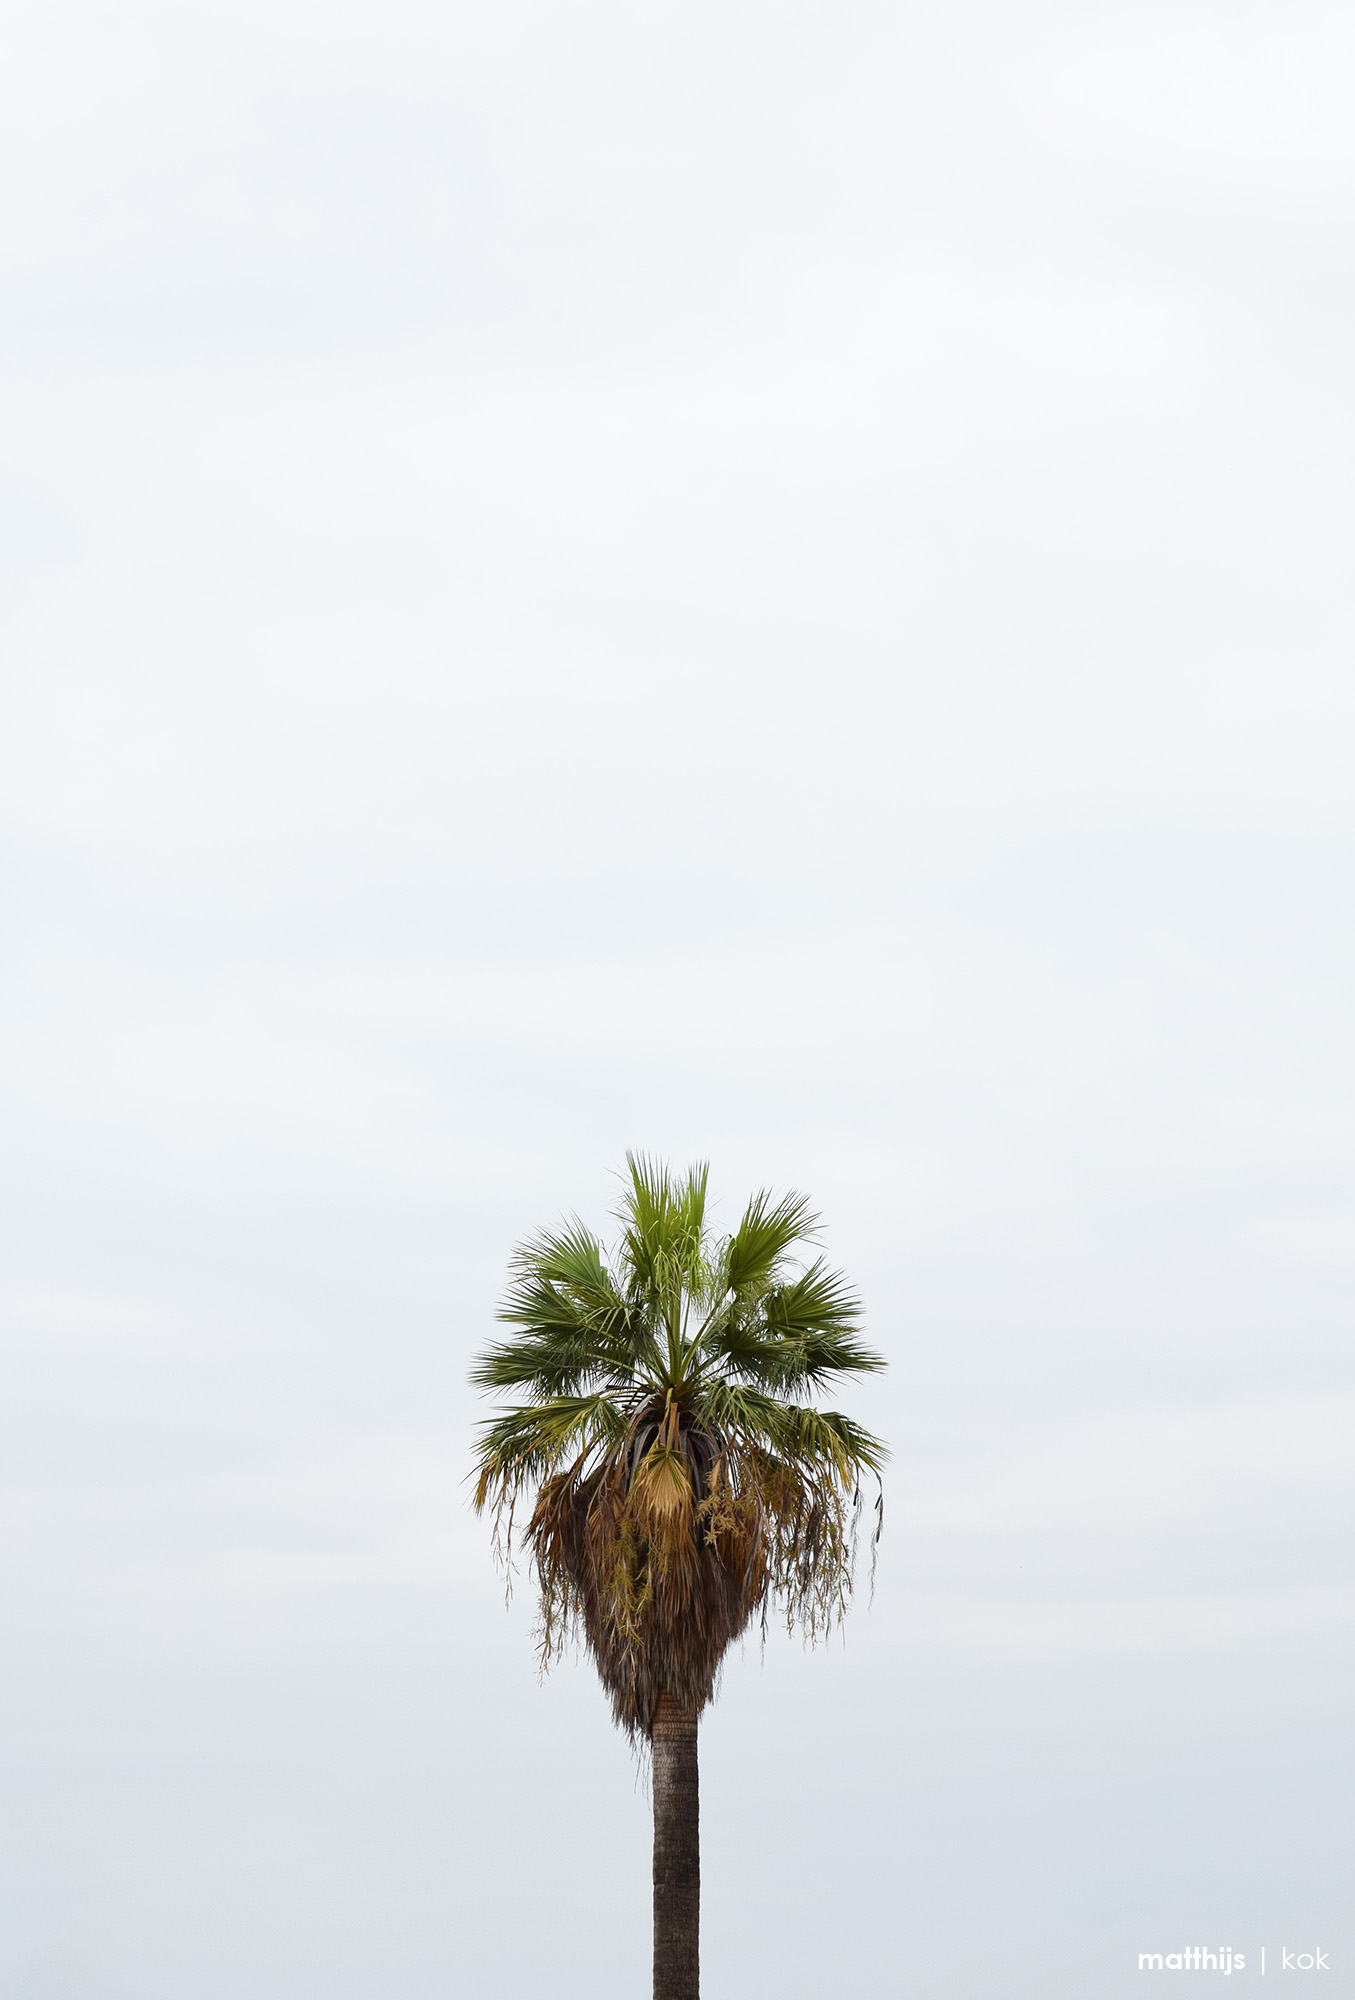 Palm, Alfama, Lisbon, Portugal | Photo by Matthijs Kok